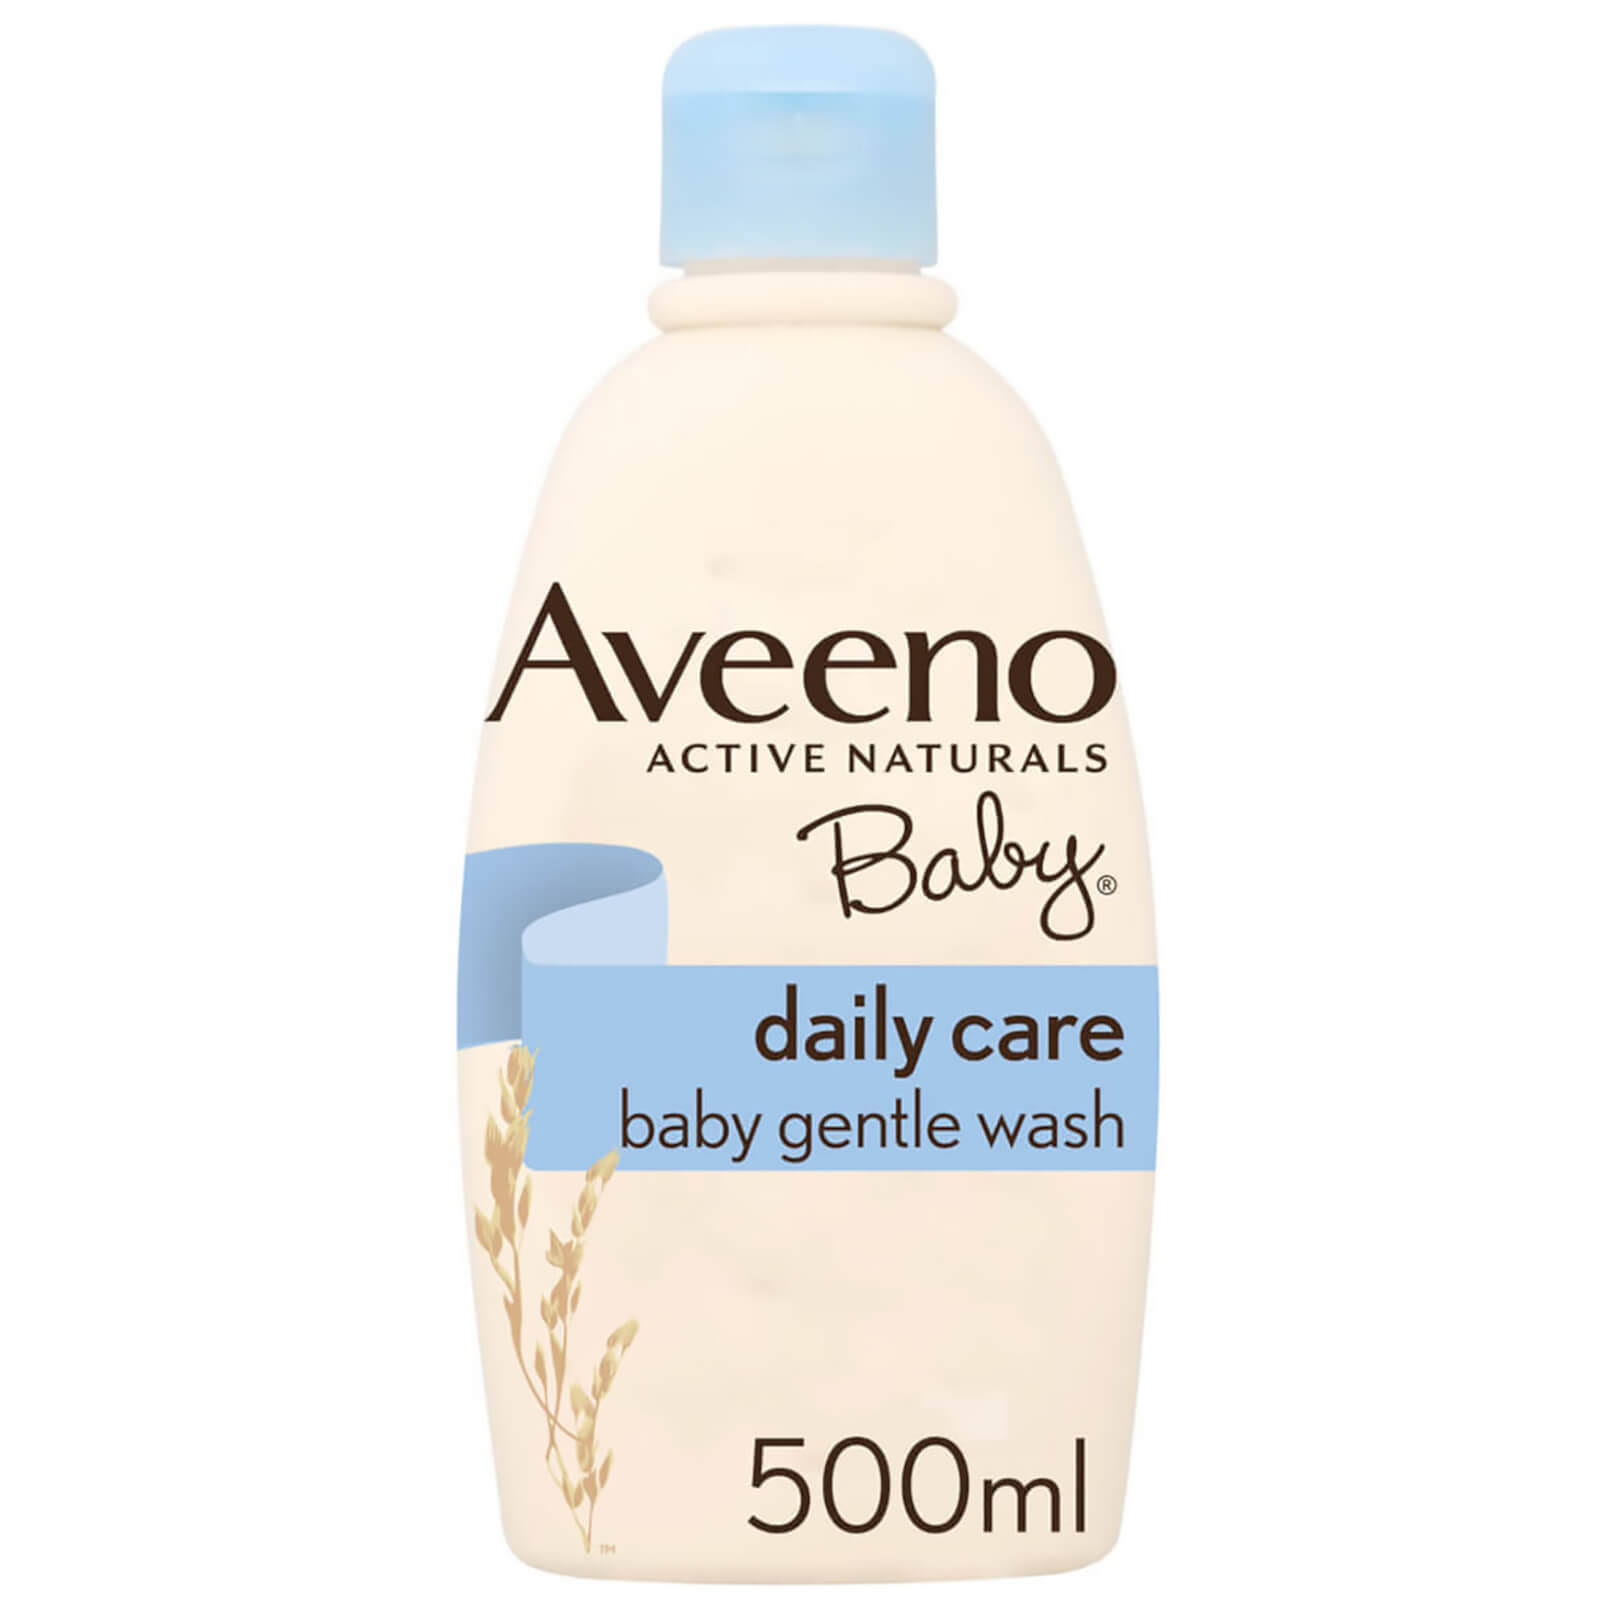 Aveeno Baby Daily Care Baby Gentle Wash - 500ml